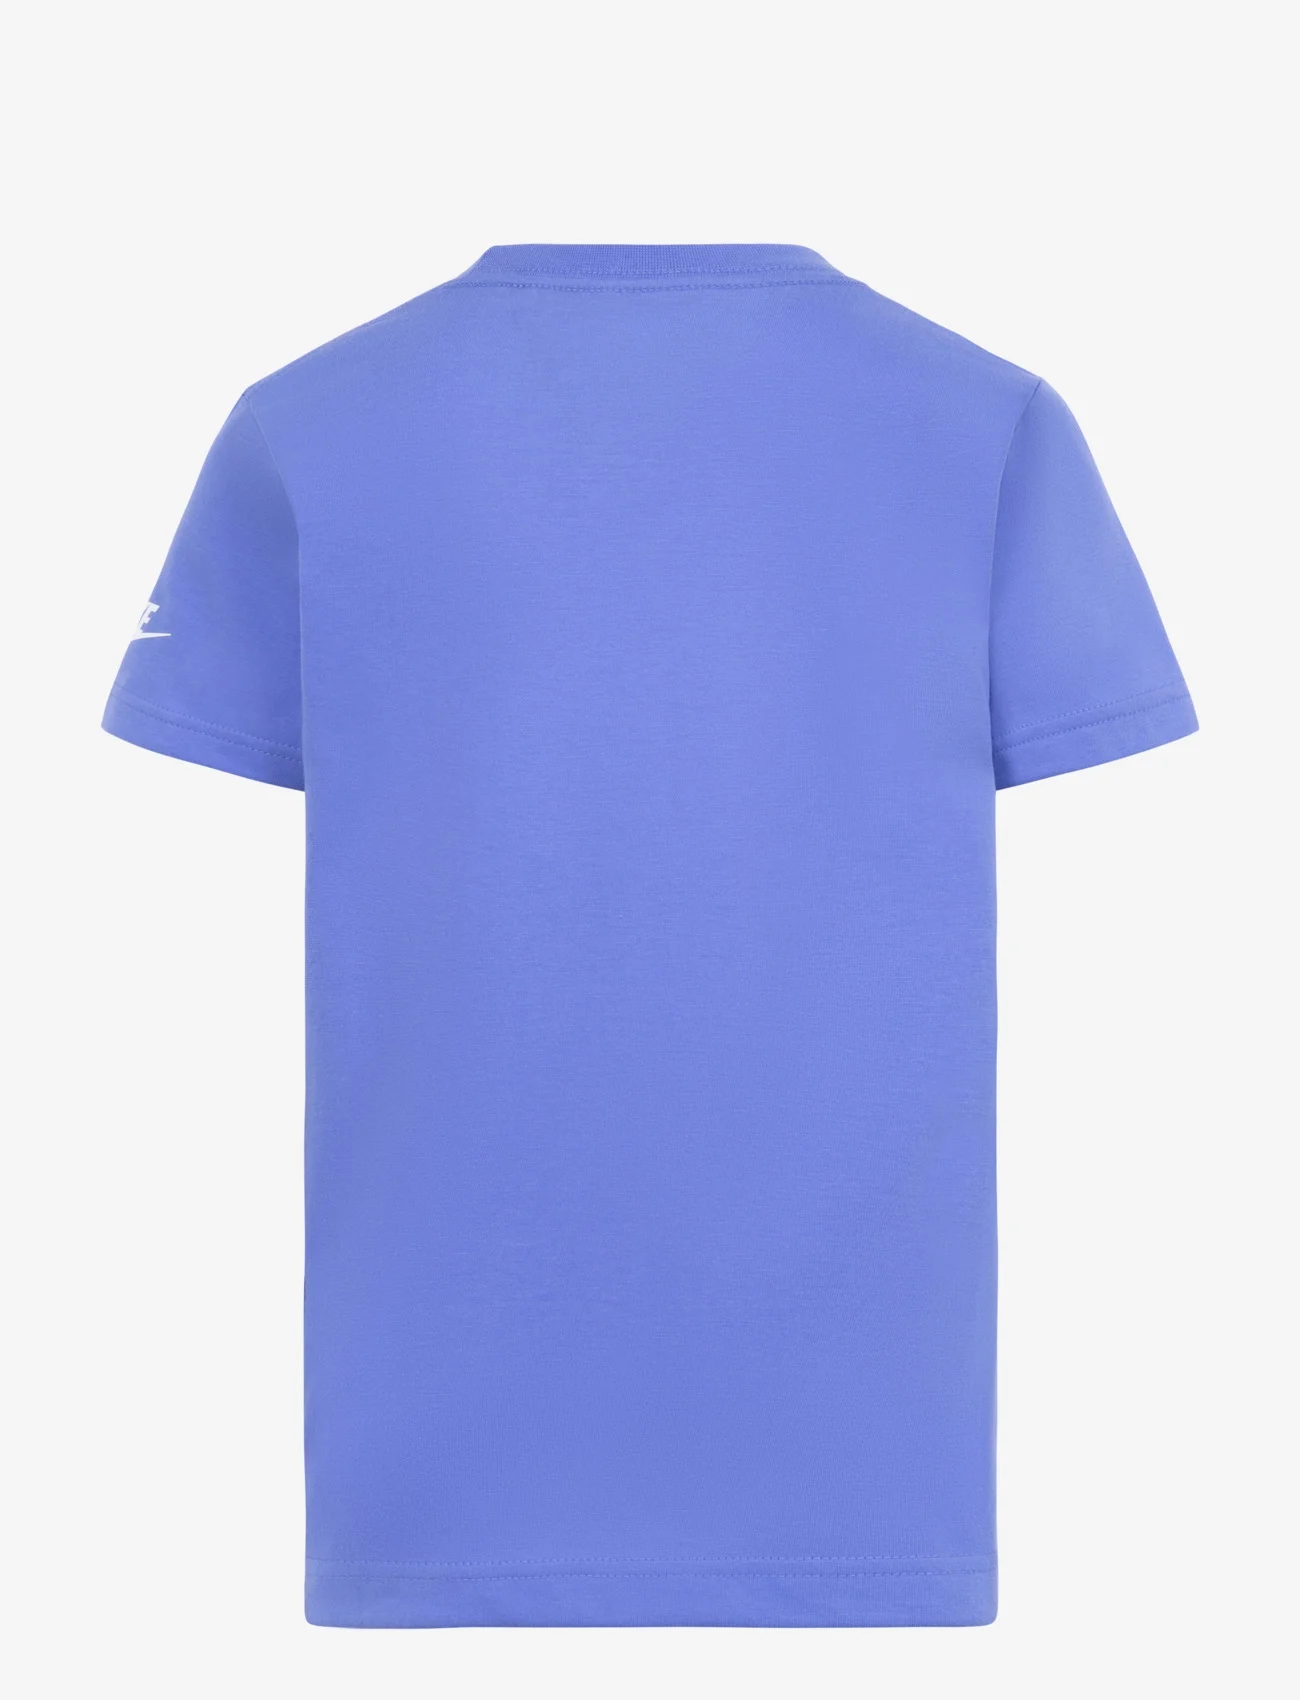 Nike - NKB FUTURA EVERGREEN - kortärmade t-shirts - nike polar - 1